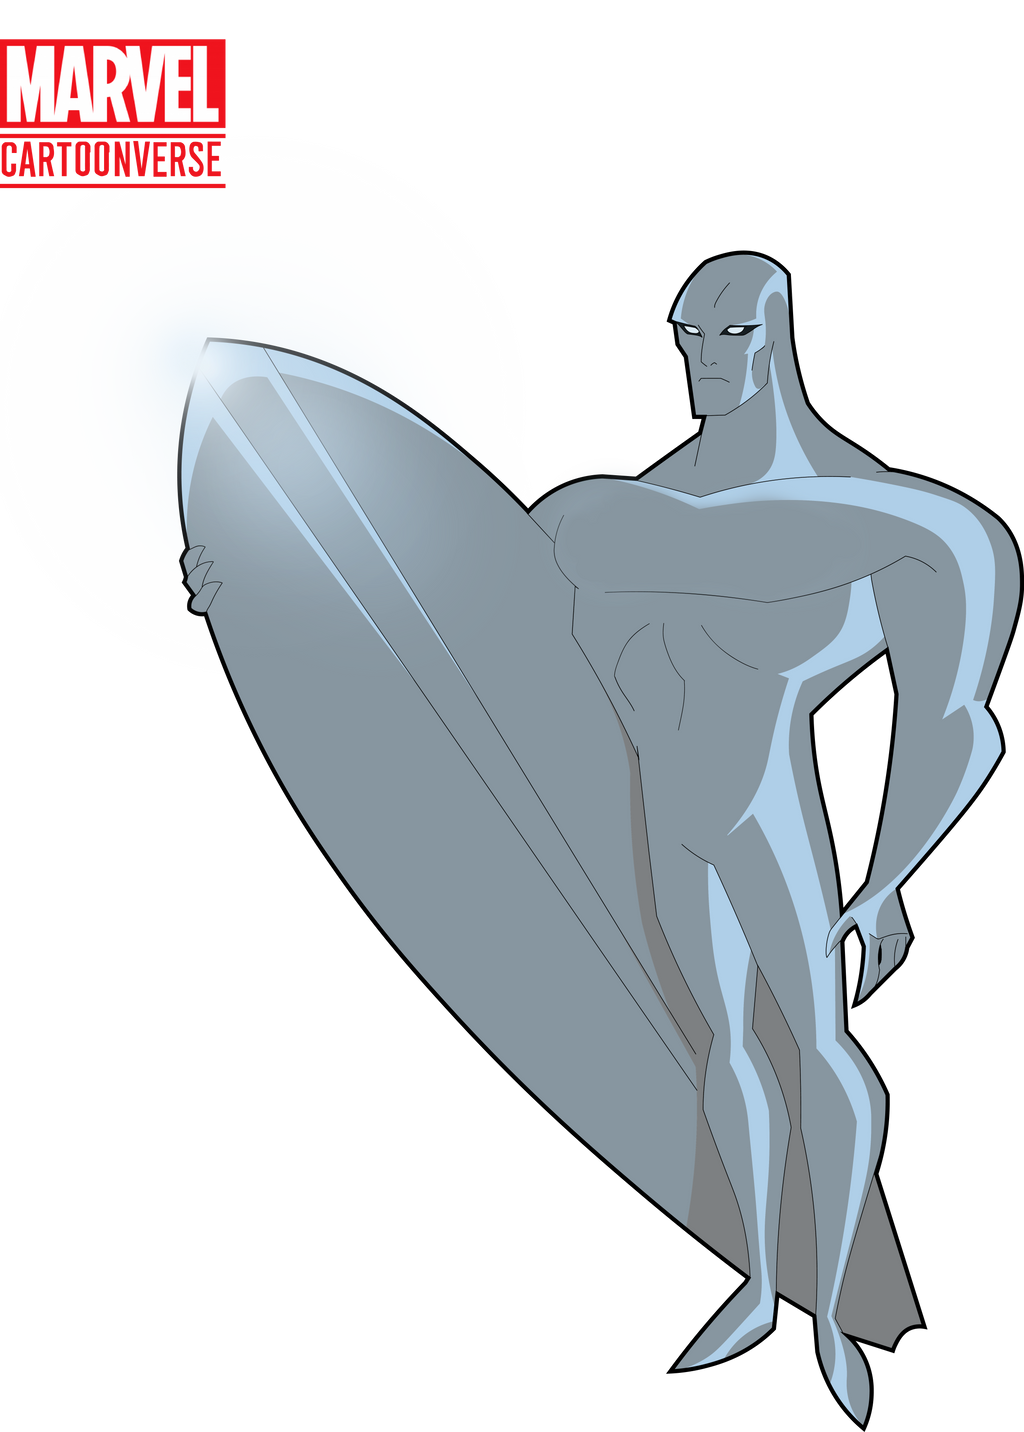 MARVELS Silver Surfer by Ferreira-404 on DeviantArt